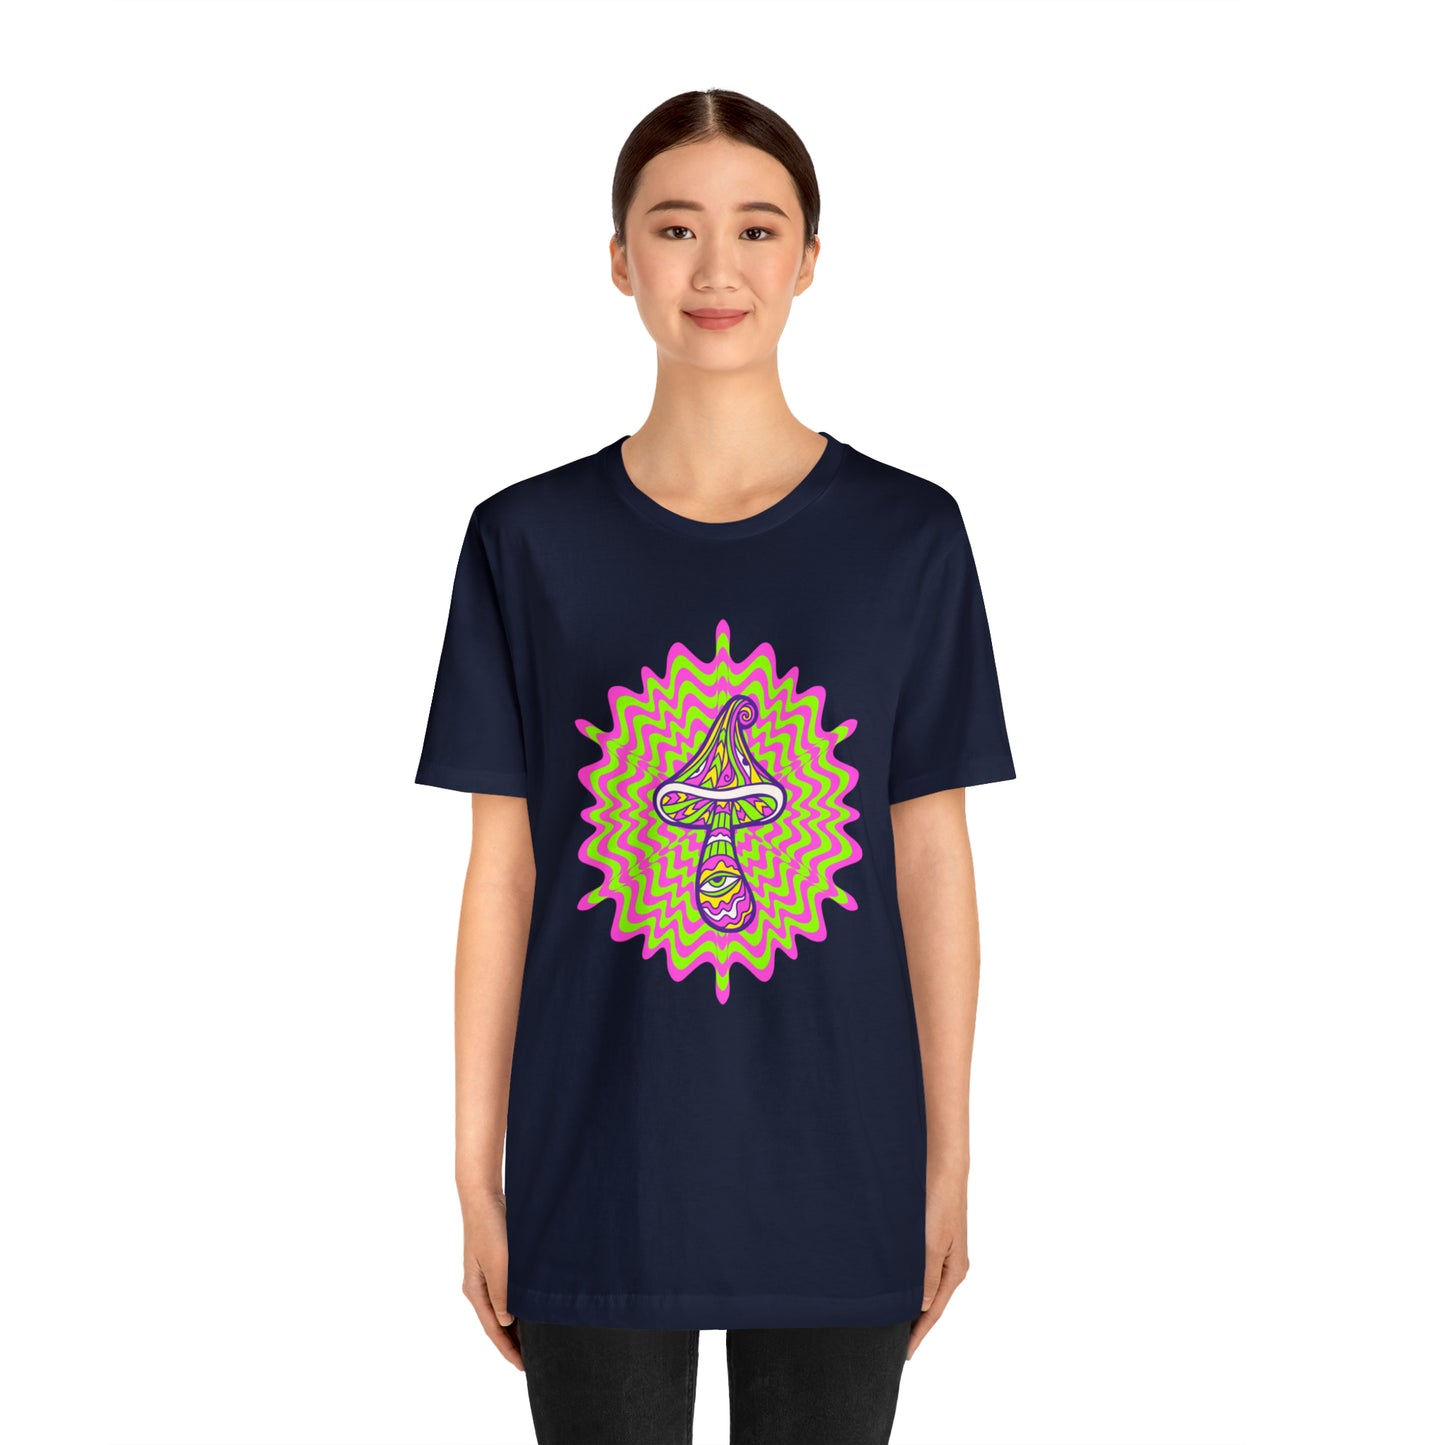 Colorful, Retro Mushrooms T-shirt- Adult, Regular Fit, Soft Cotton, T-shirt